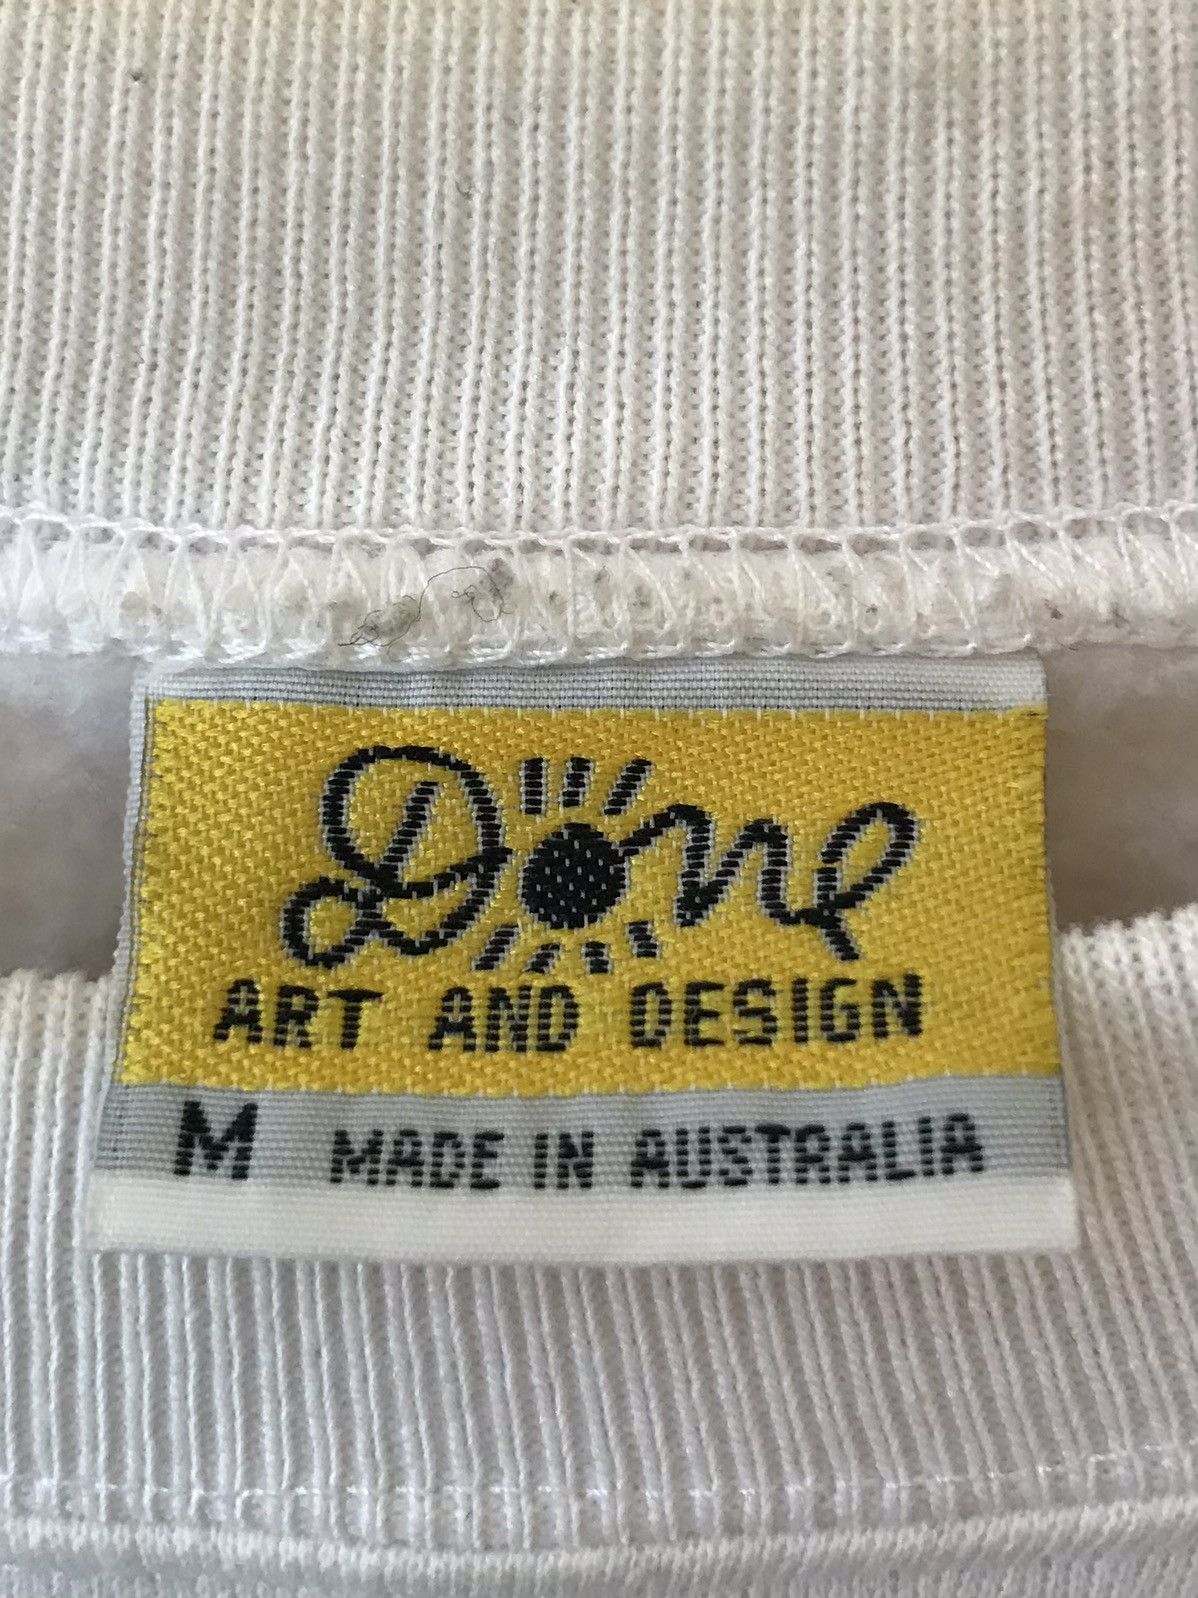 Vintage Vintage Ken Don Art and Design 1991 Sweatshirt Size US M / EU 48-50 / 2 - 4 Thumbnail